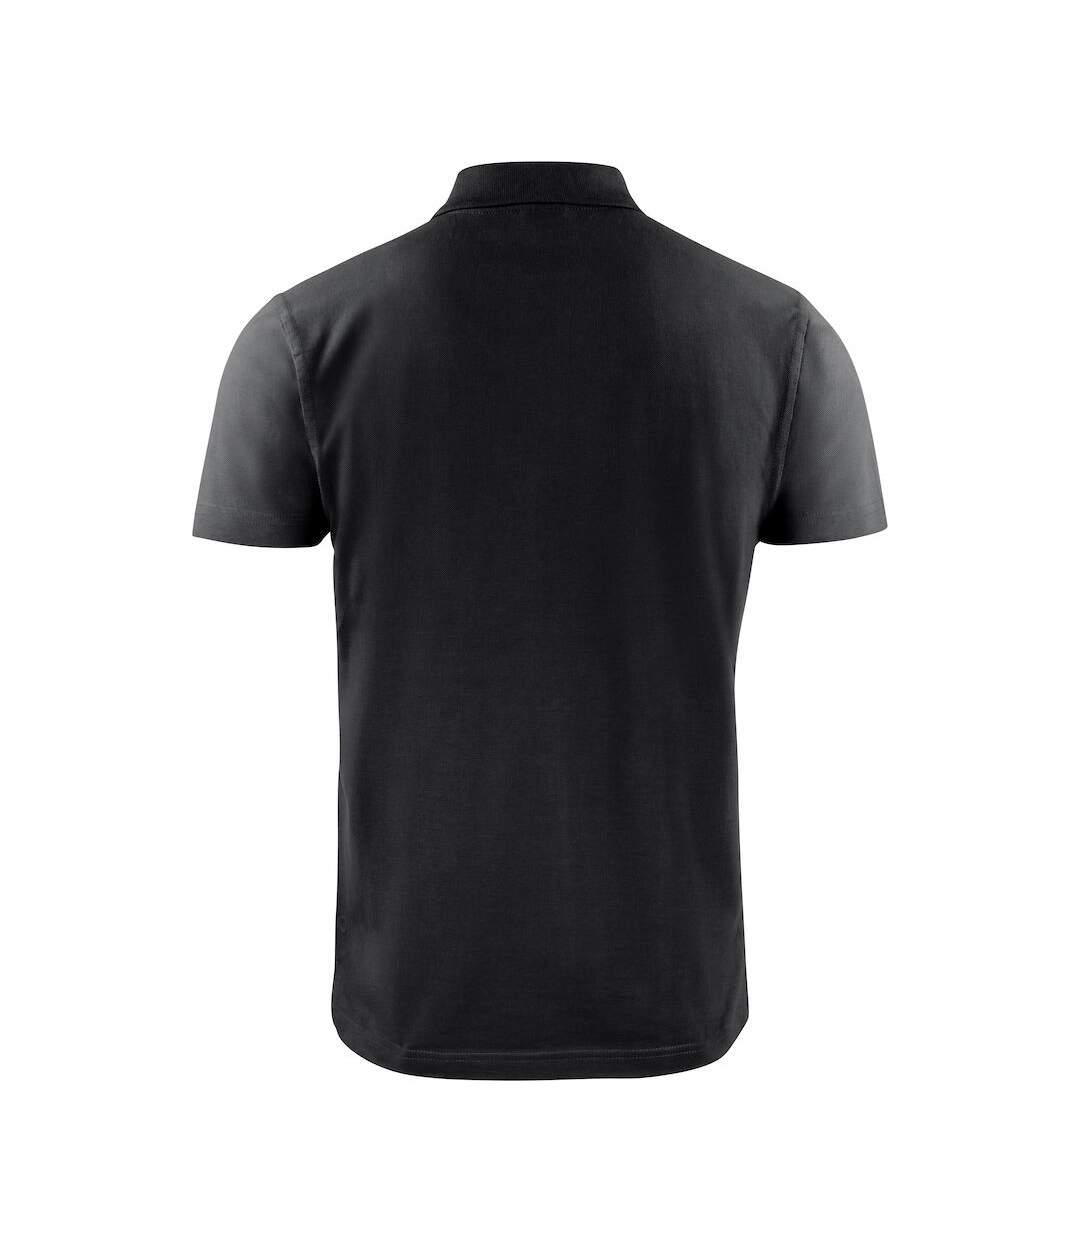 Printer Mens Surf Light RSX Polo Shirt (Black)